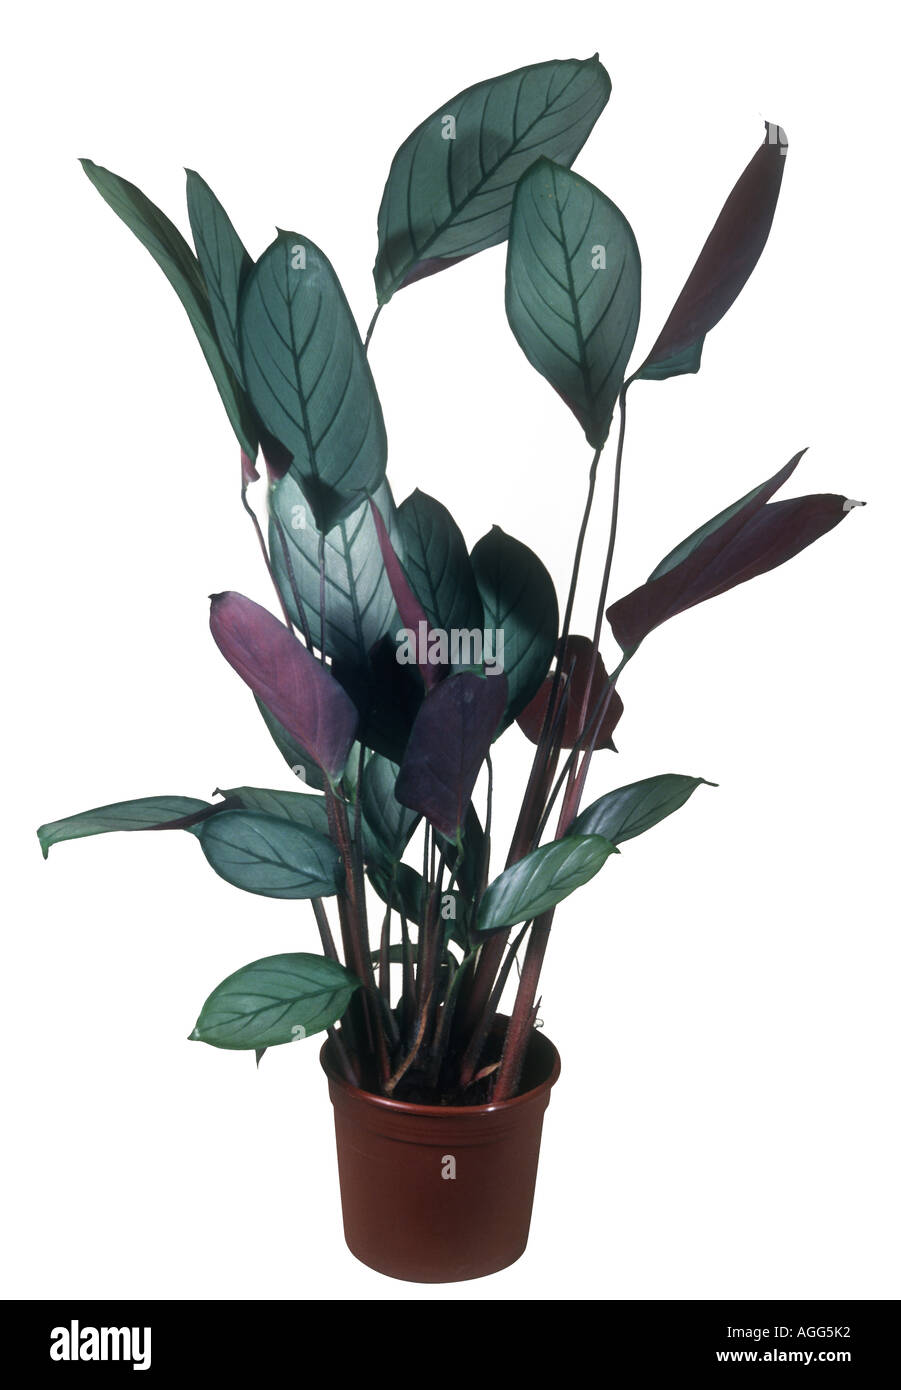 Ctenanthe (Ctenanthe setosa cv. Greystar), single plant in a pot Stock Photo